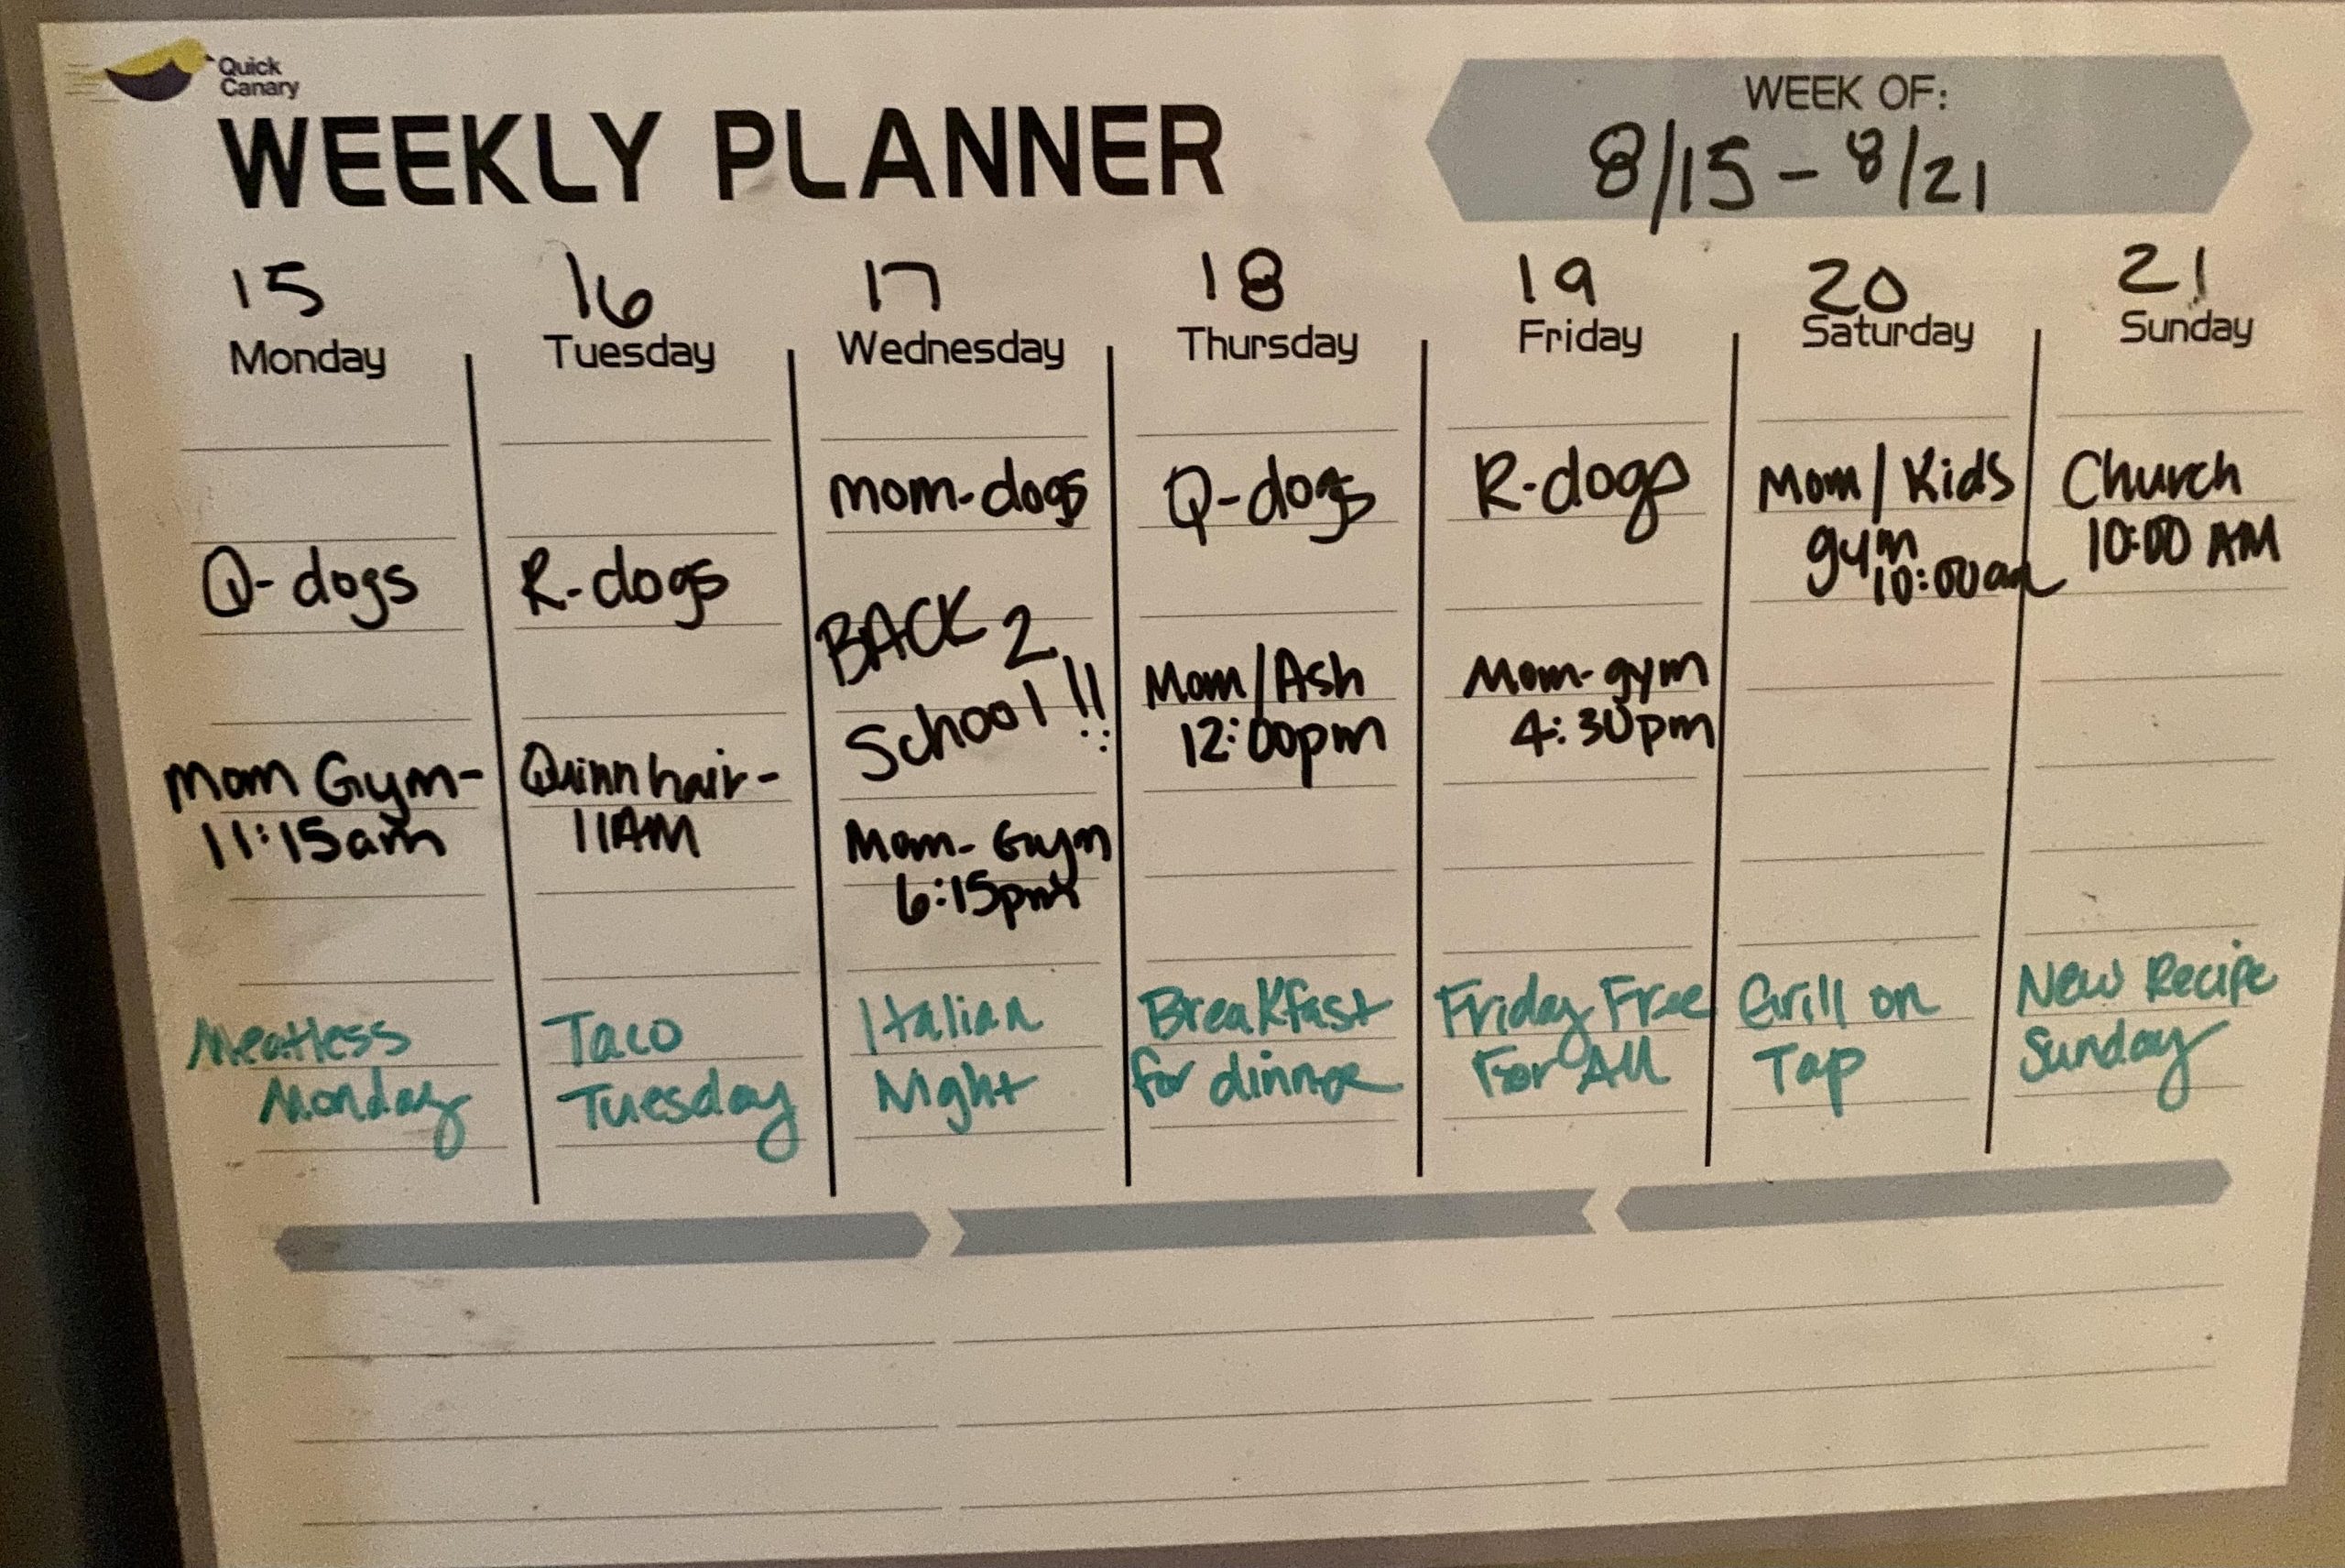 meal planning calendar